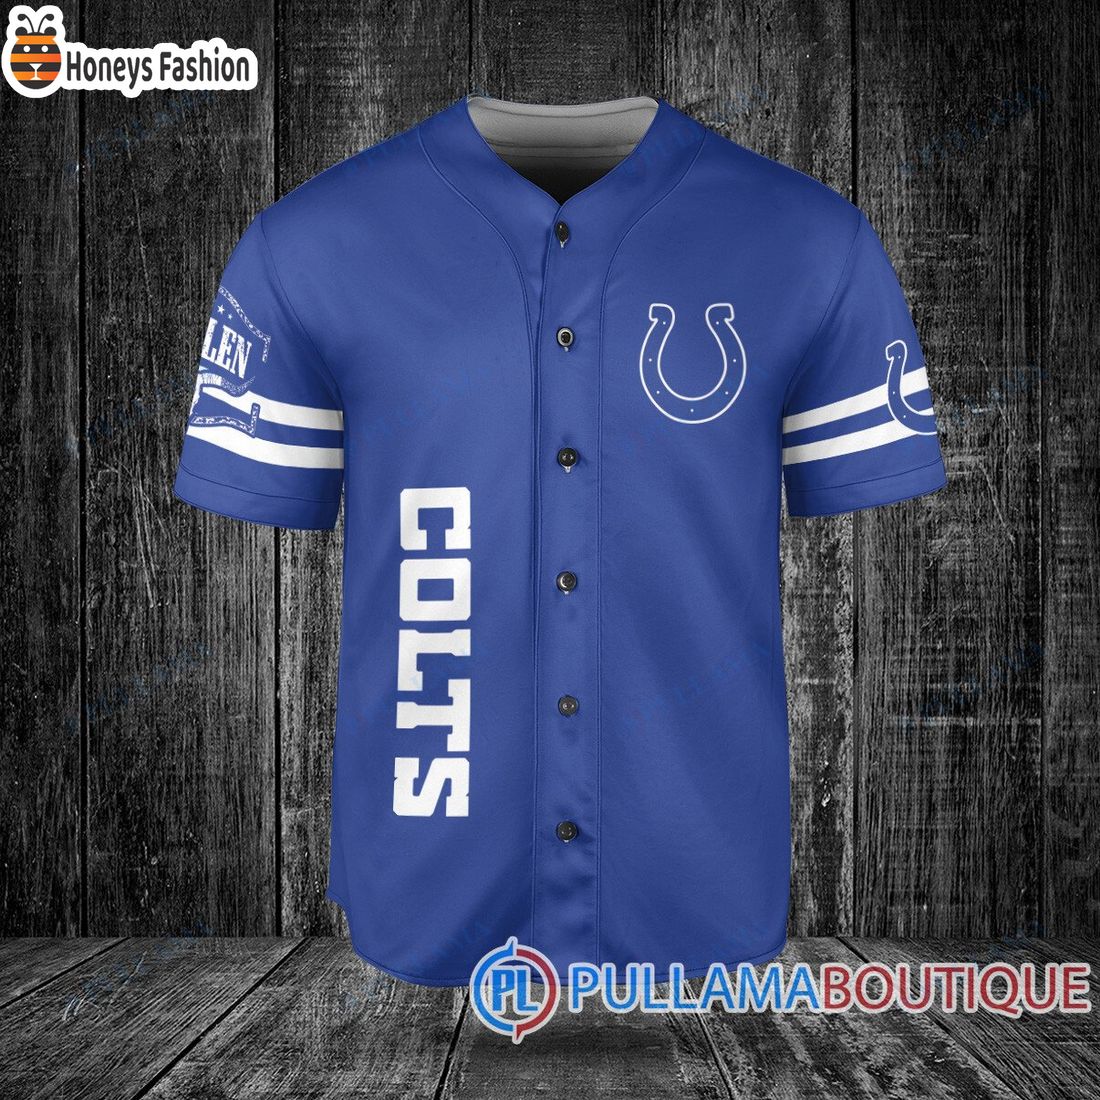 TOP SELLER Morgan Wallen Indianapolis Colts Custom Blue Baseball Jersey